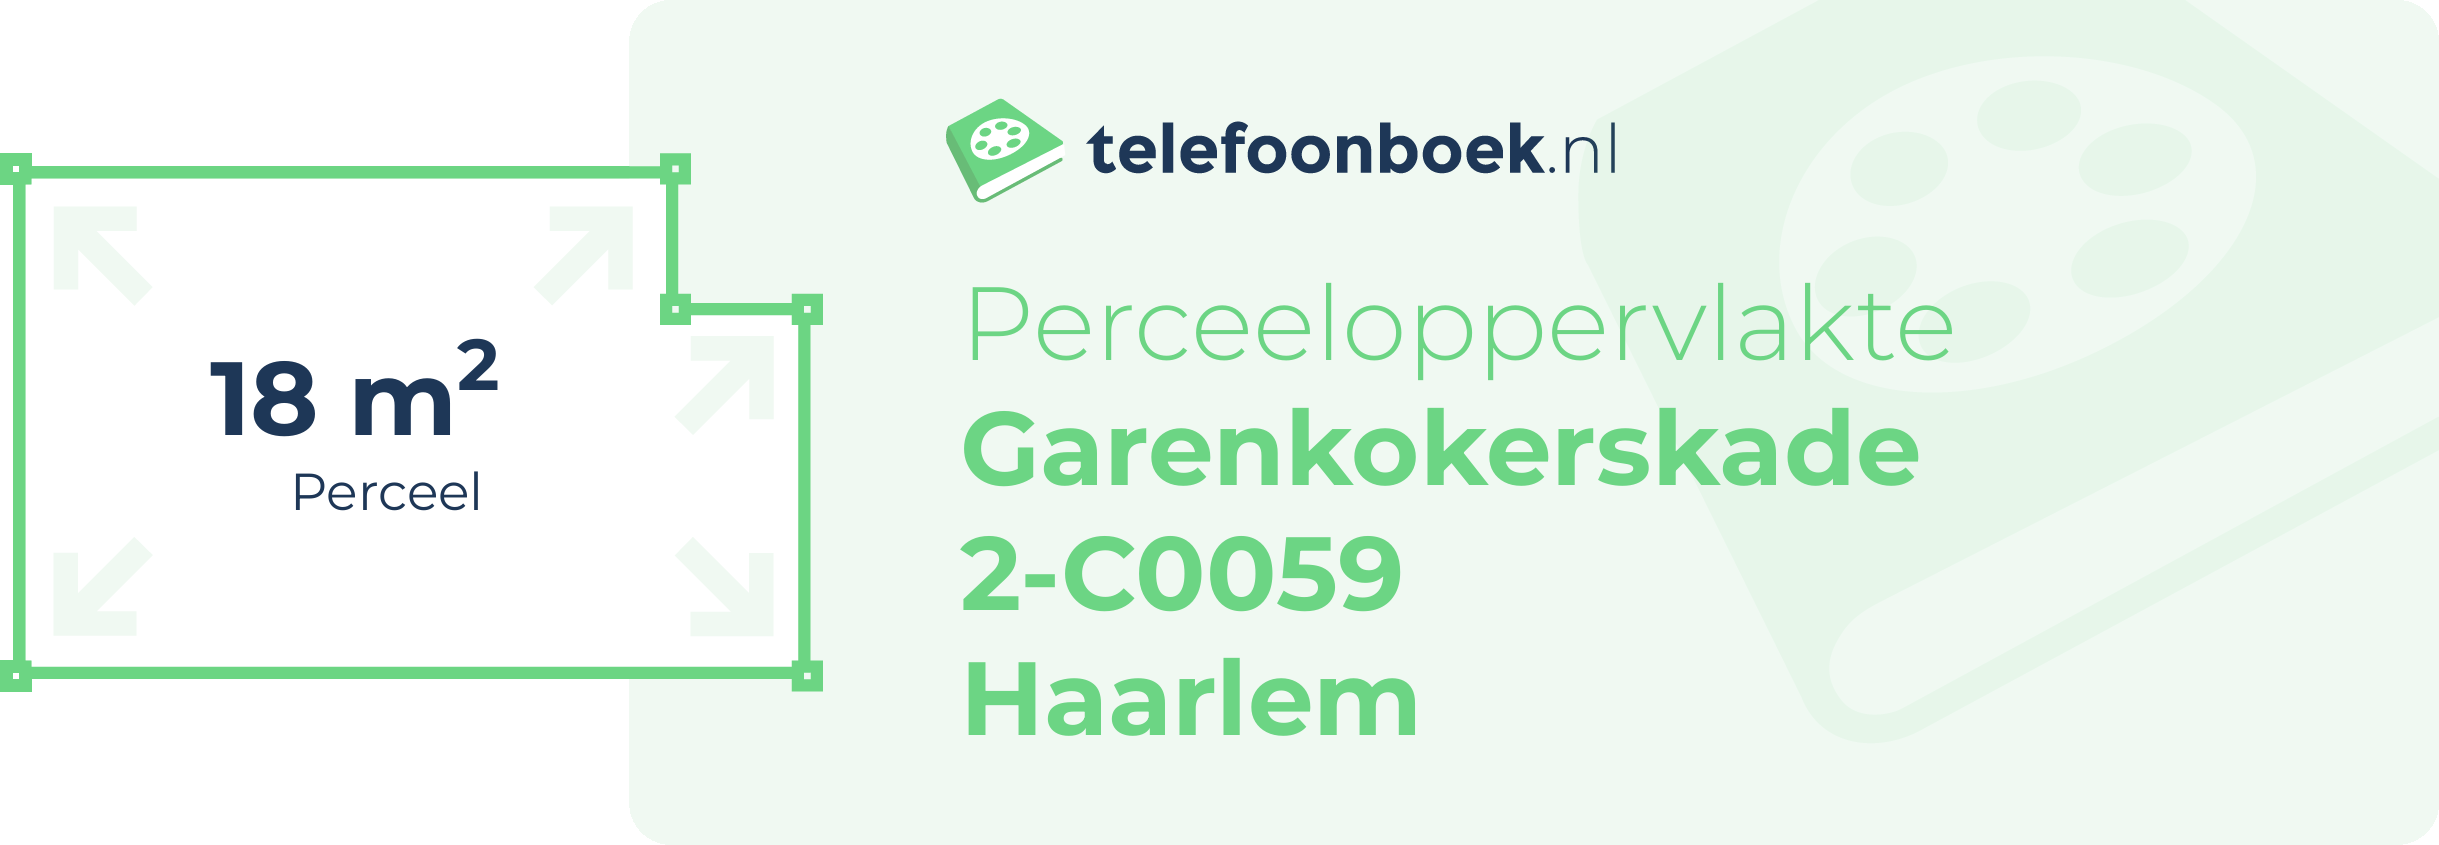 Perceeloppervlakte Garenkokerskade 2-C0059 Haarlem